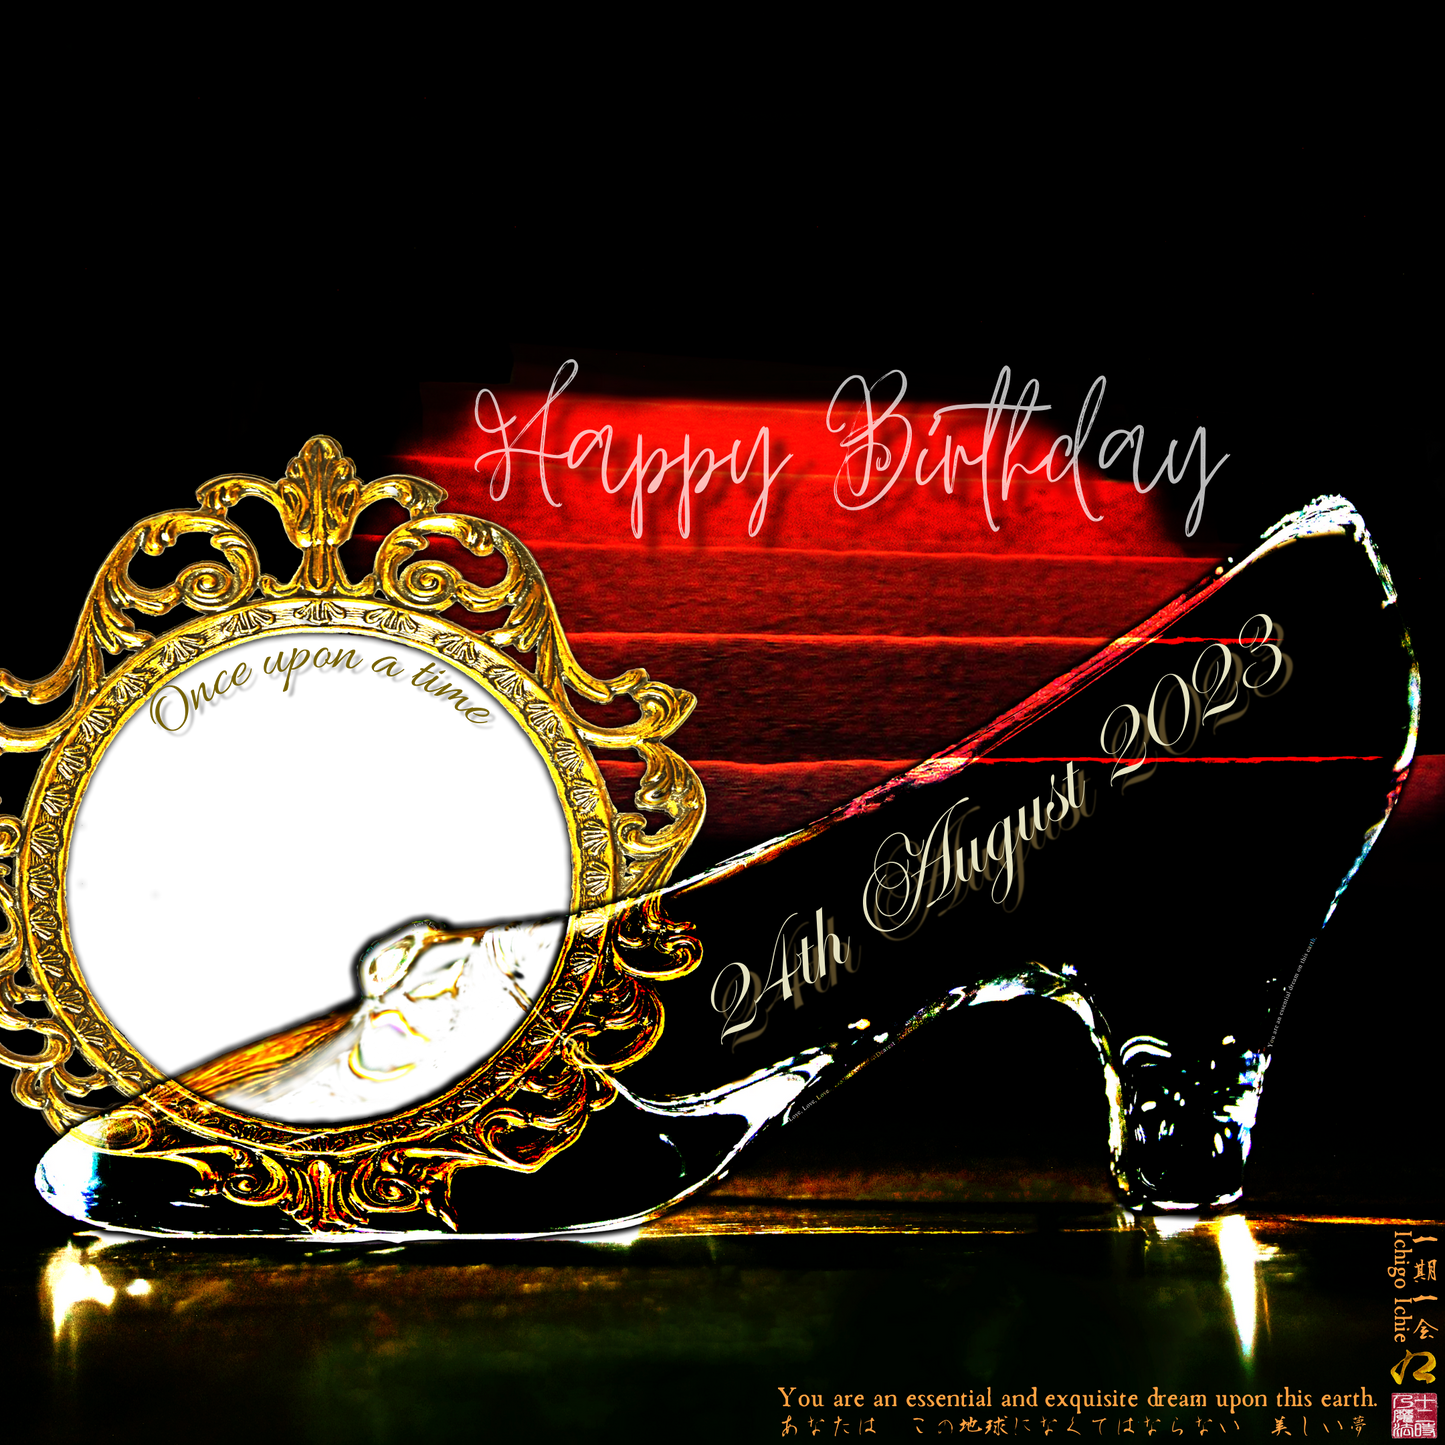 Happy Birthday Glass Slipper "Ichigo Ichie" 24th August 2023 the Left (1-of-1) NFT Art